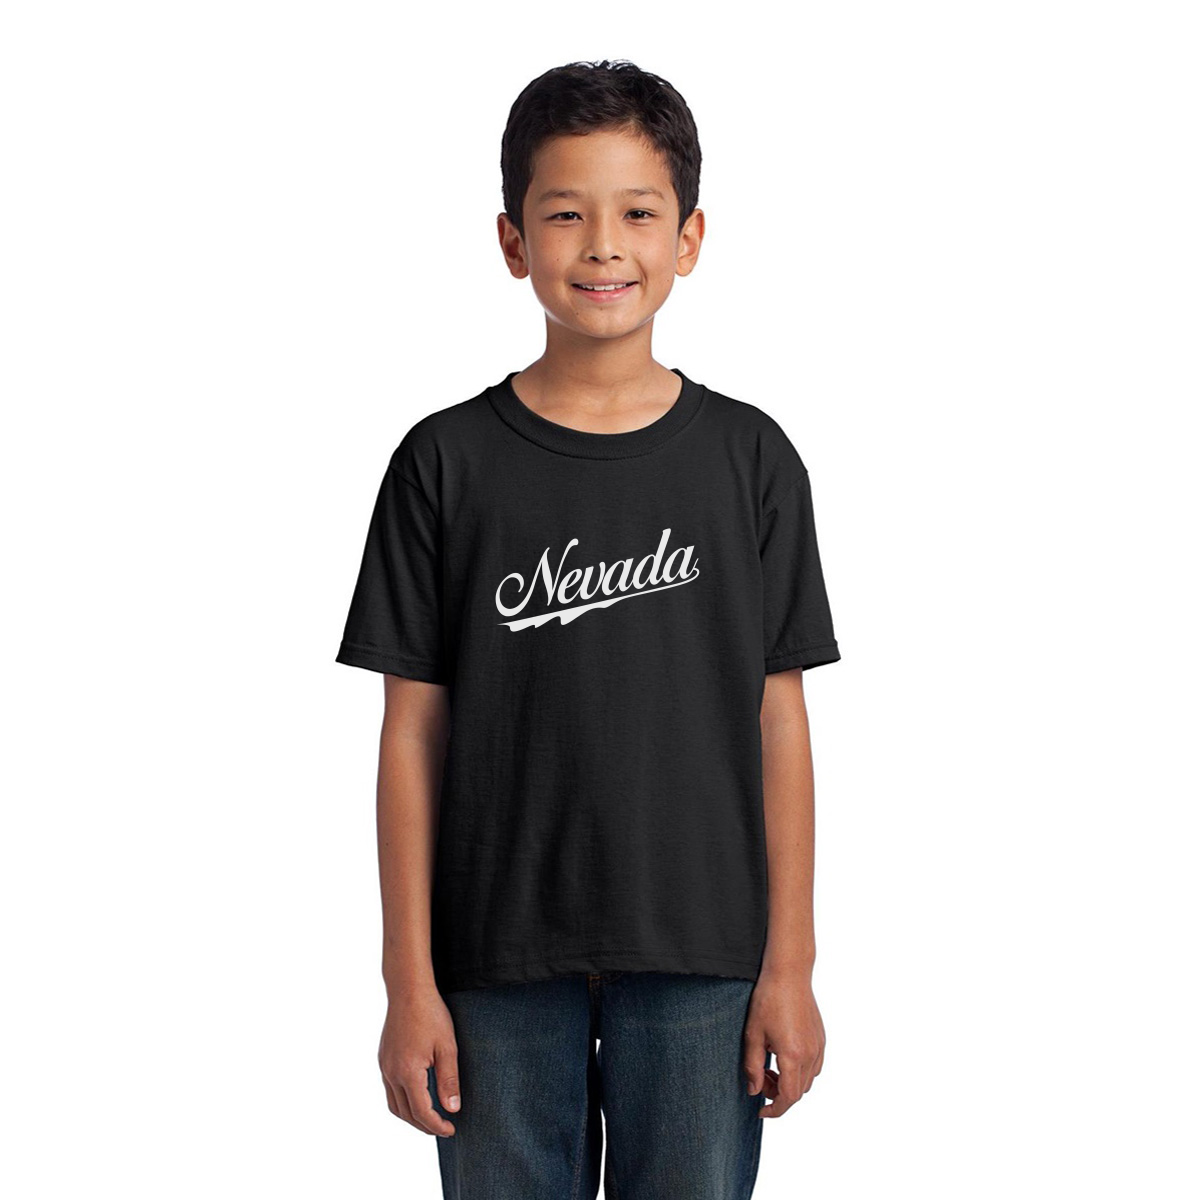 Nevada Kids T-shirt | Black